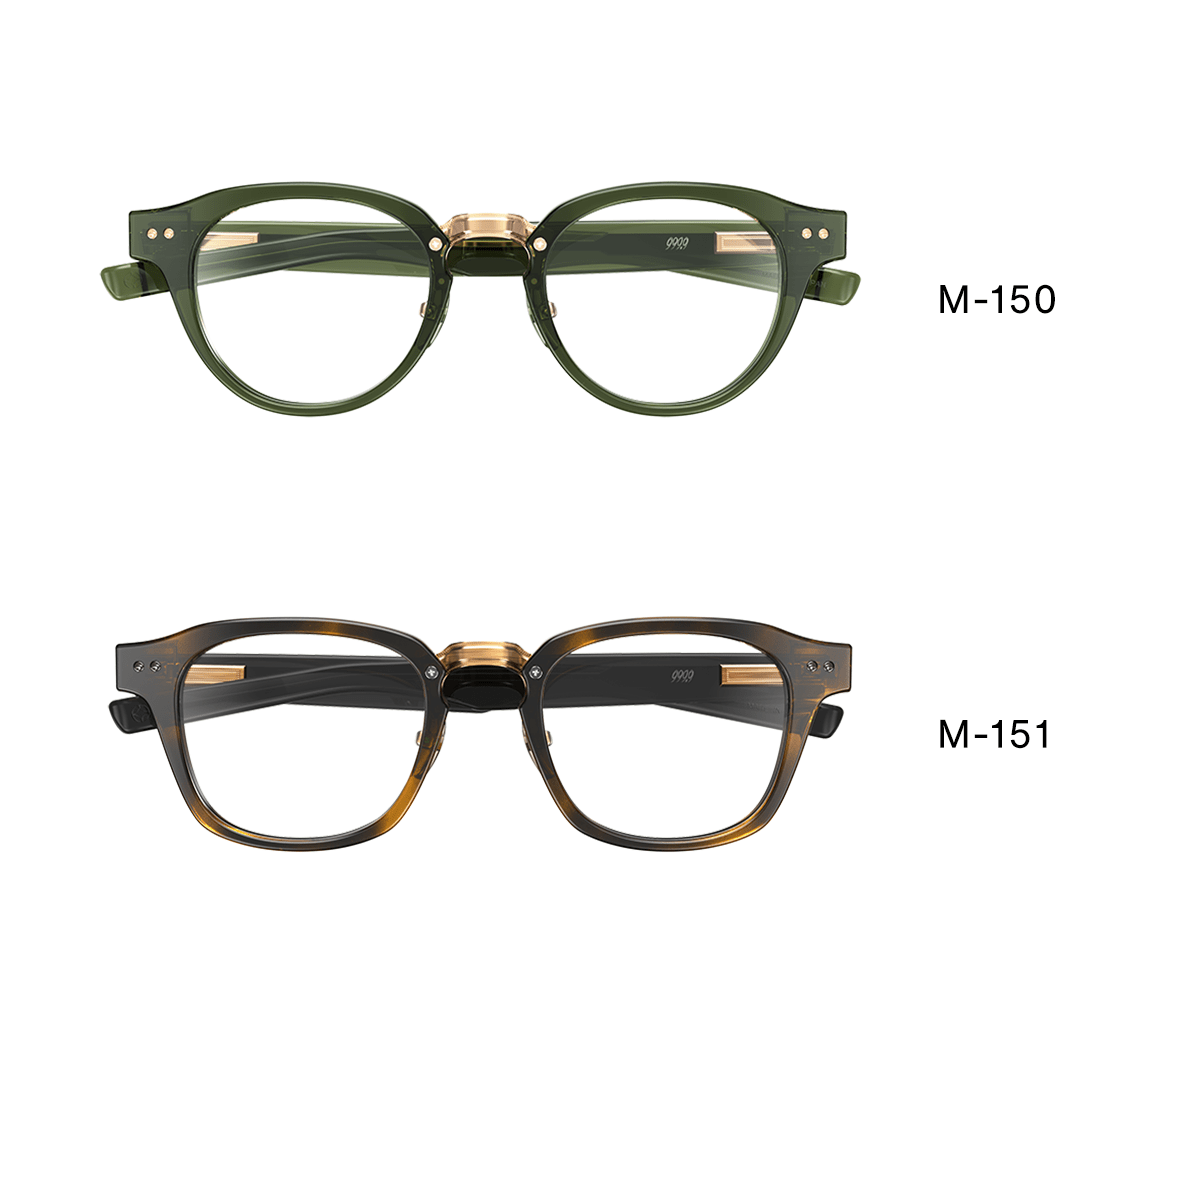 M-150 series